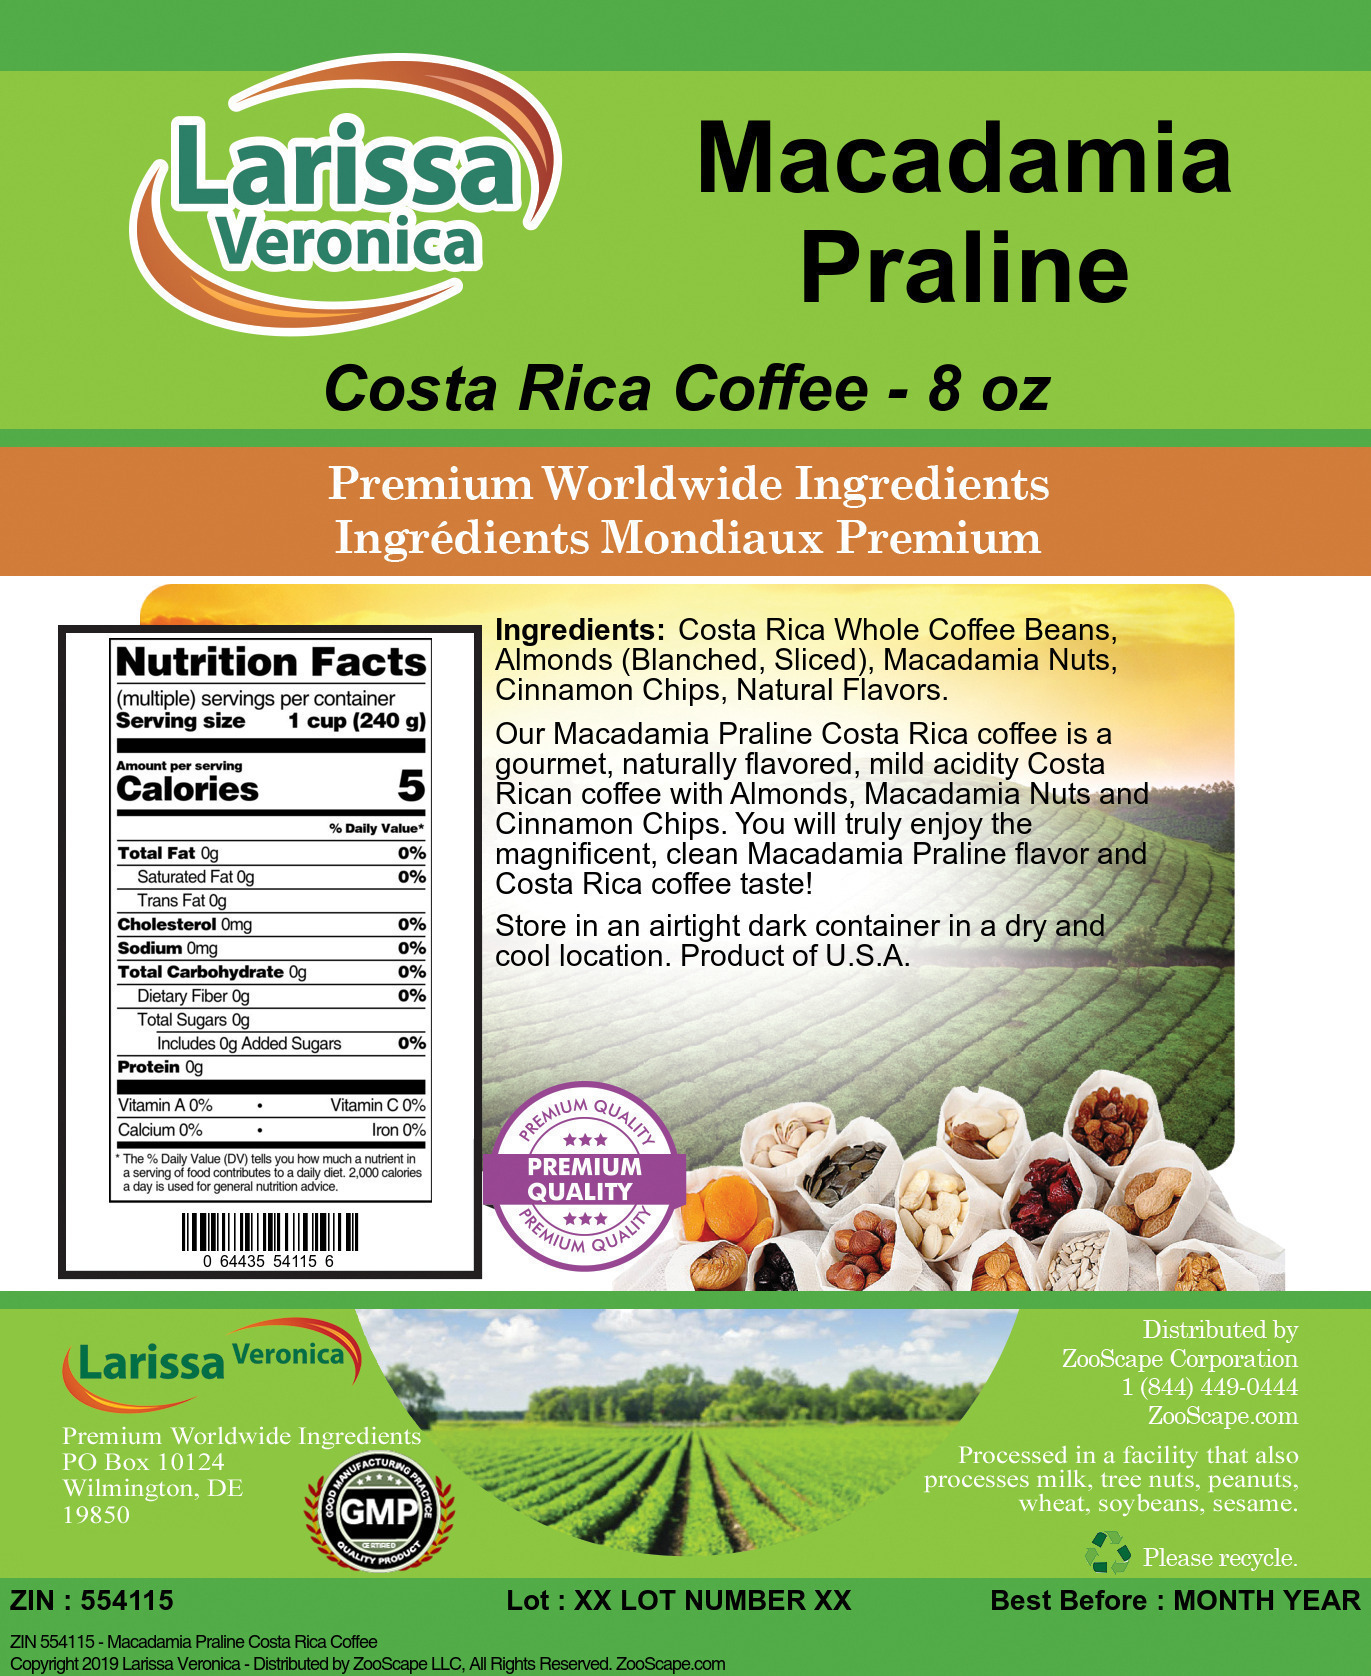 Macadamia Praline Costa Rica Coffee - Label